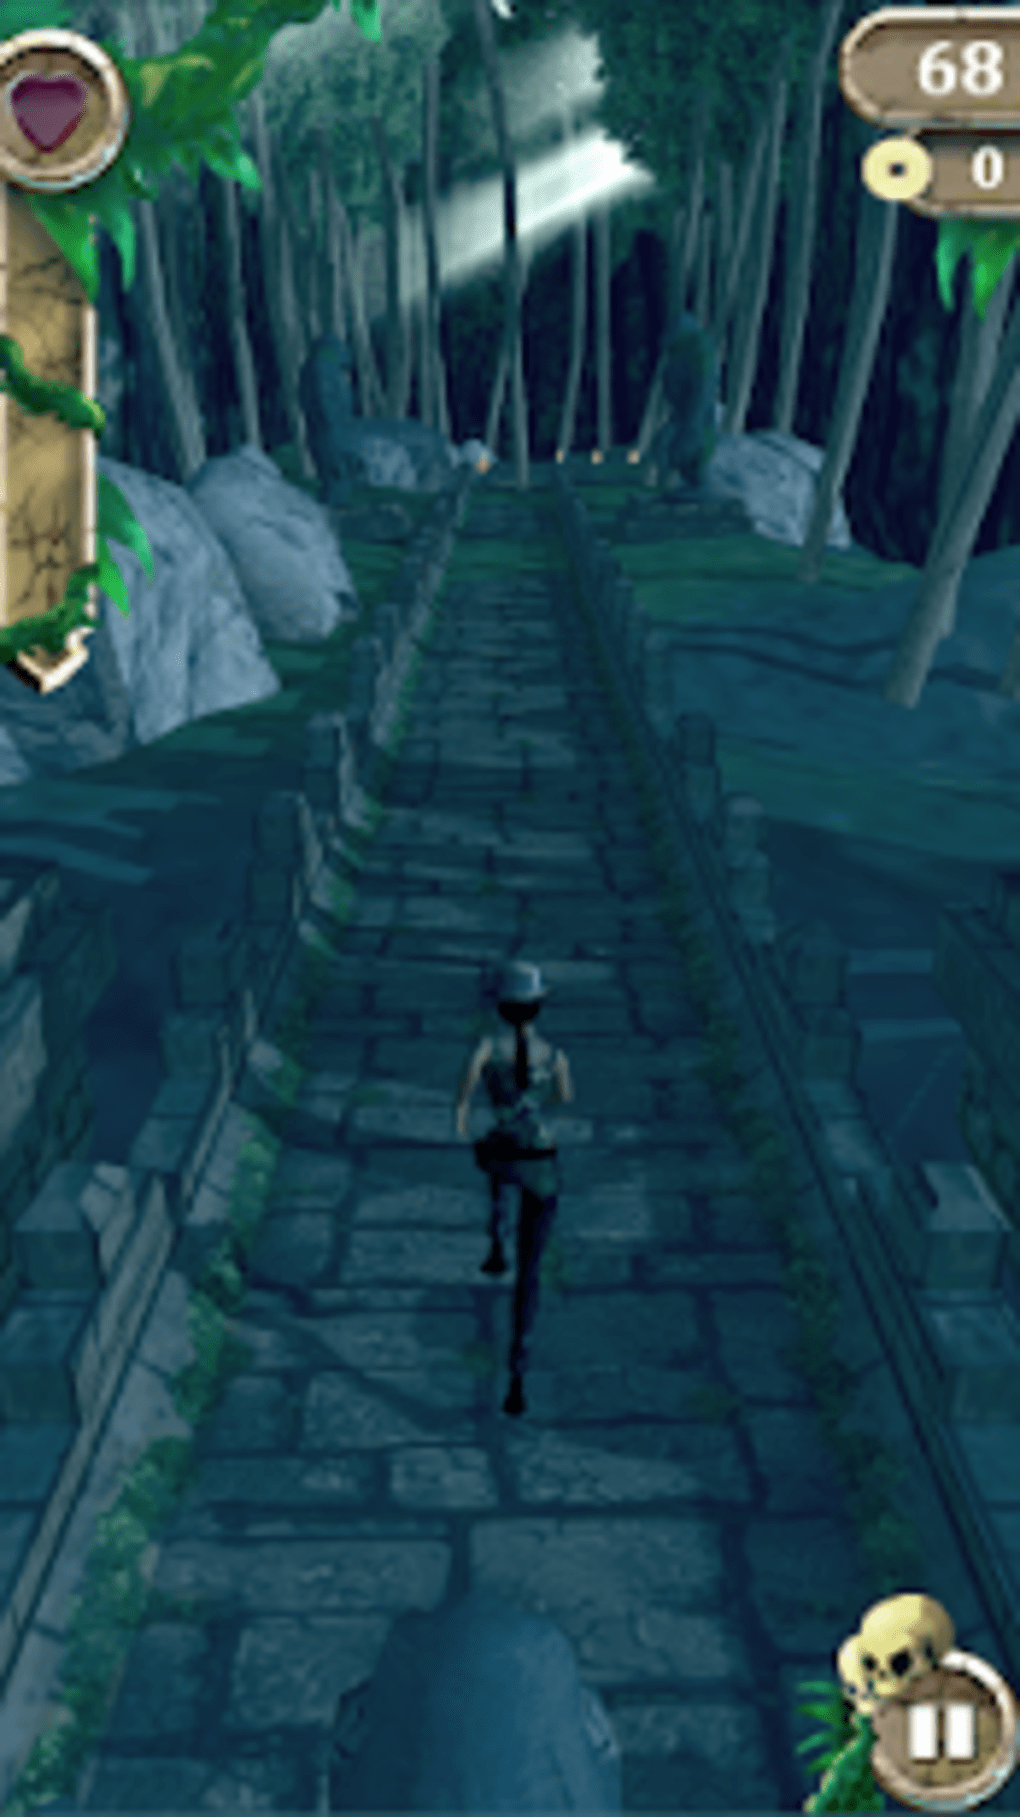 Tomb Runner - Temple Raider: 3 2 1 & Run for Life! Endless Run 